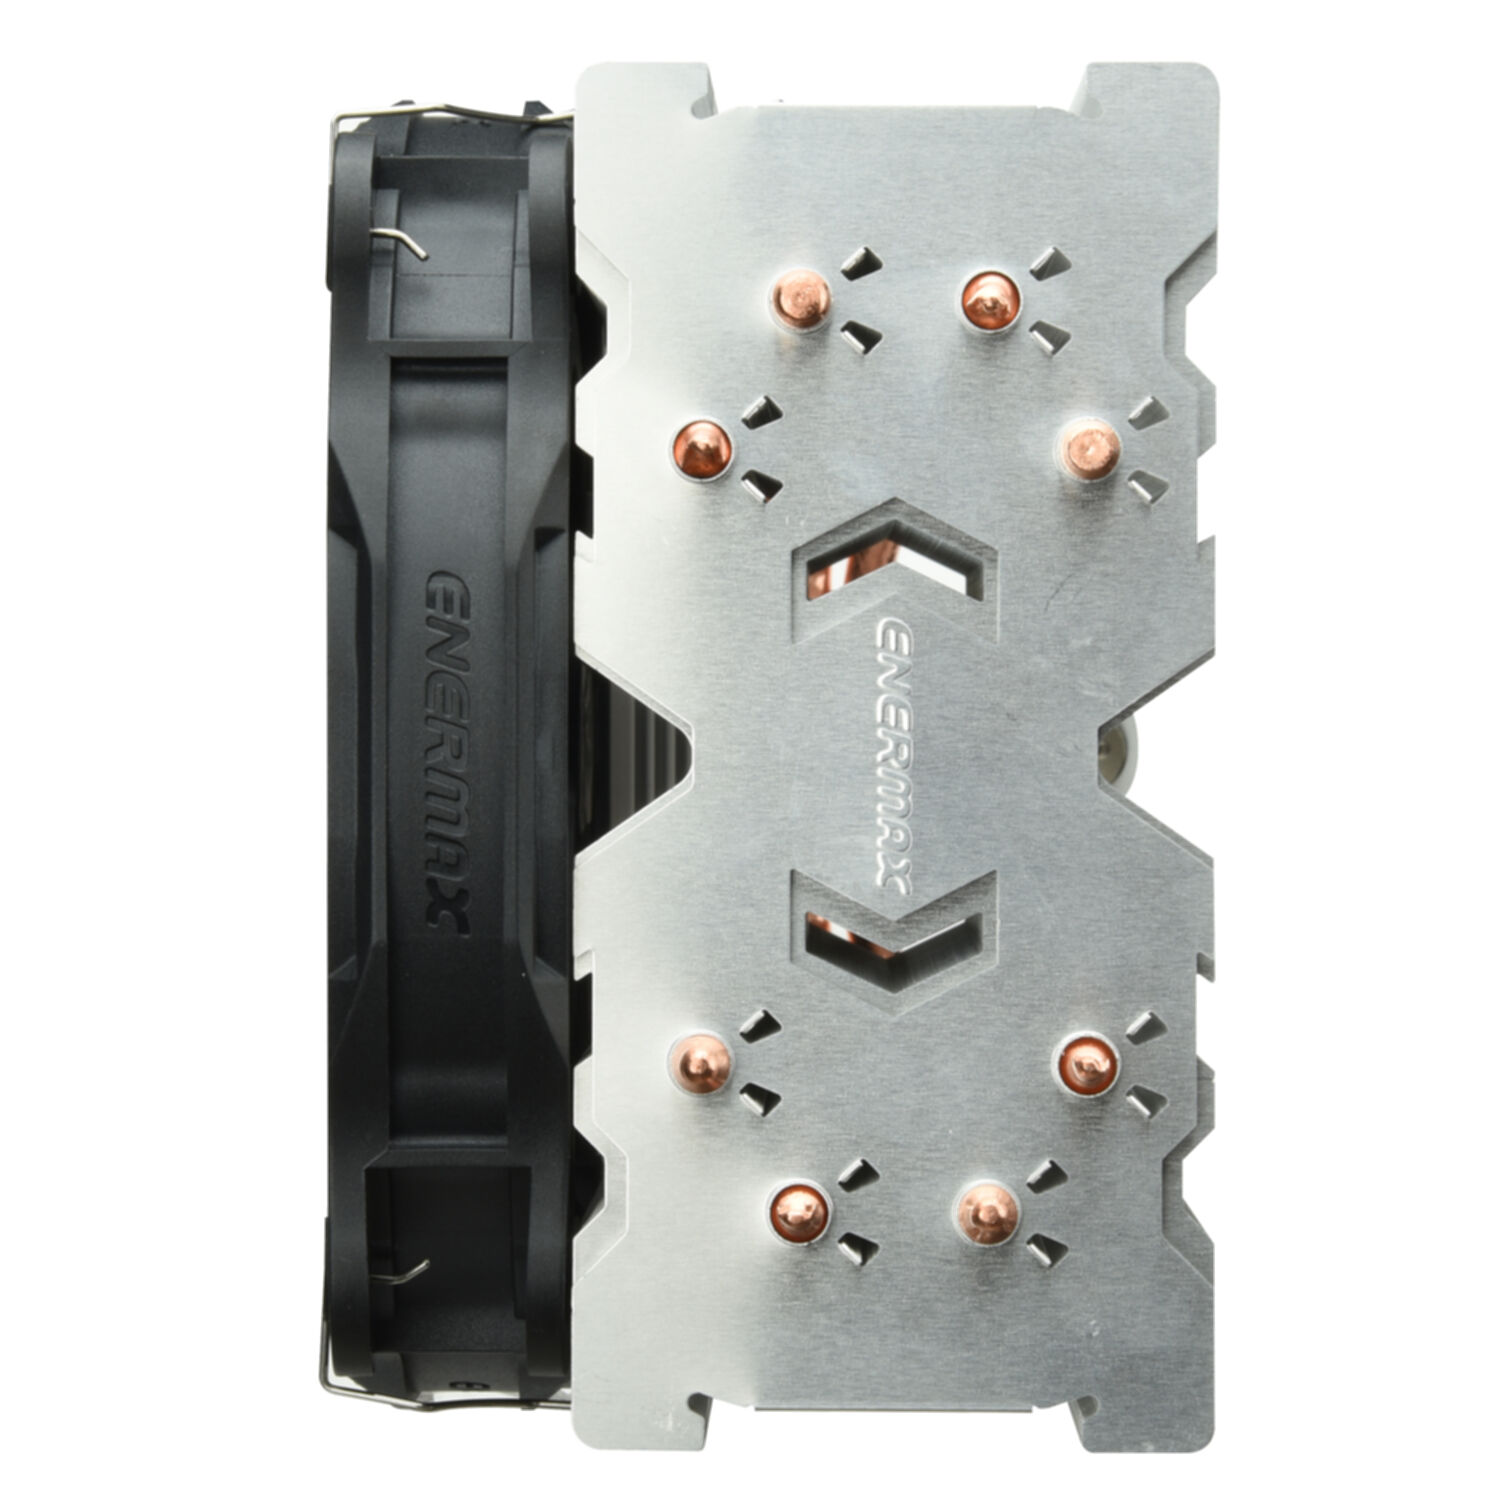 CPU ENERMAX Schwarz Kühler, ETS-F40-FS Aluminium,